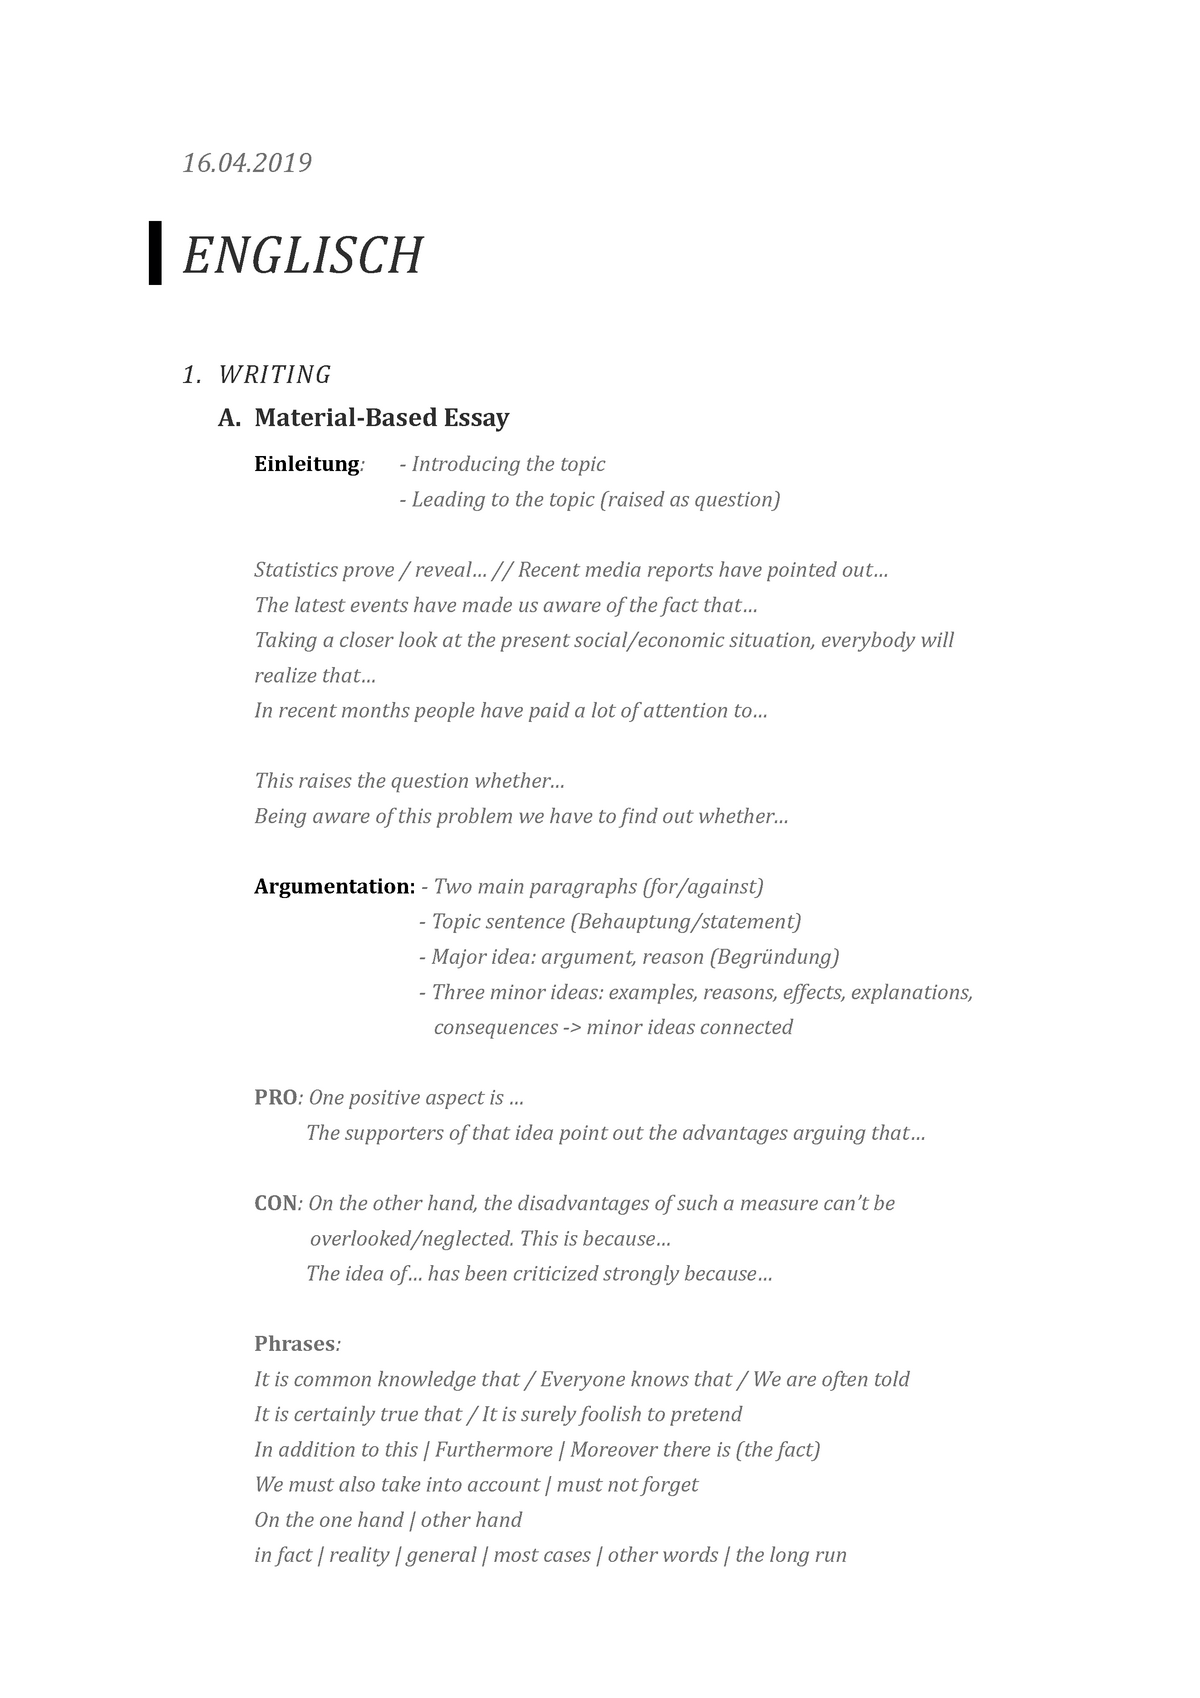 Englisch Writing 16.04 ENGLISCH 1. WRITING A. MaterialBased Essay